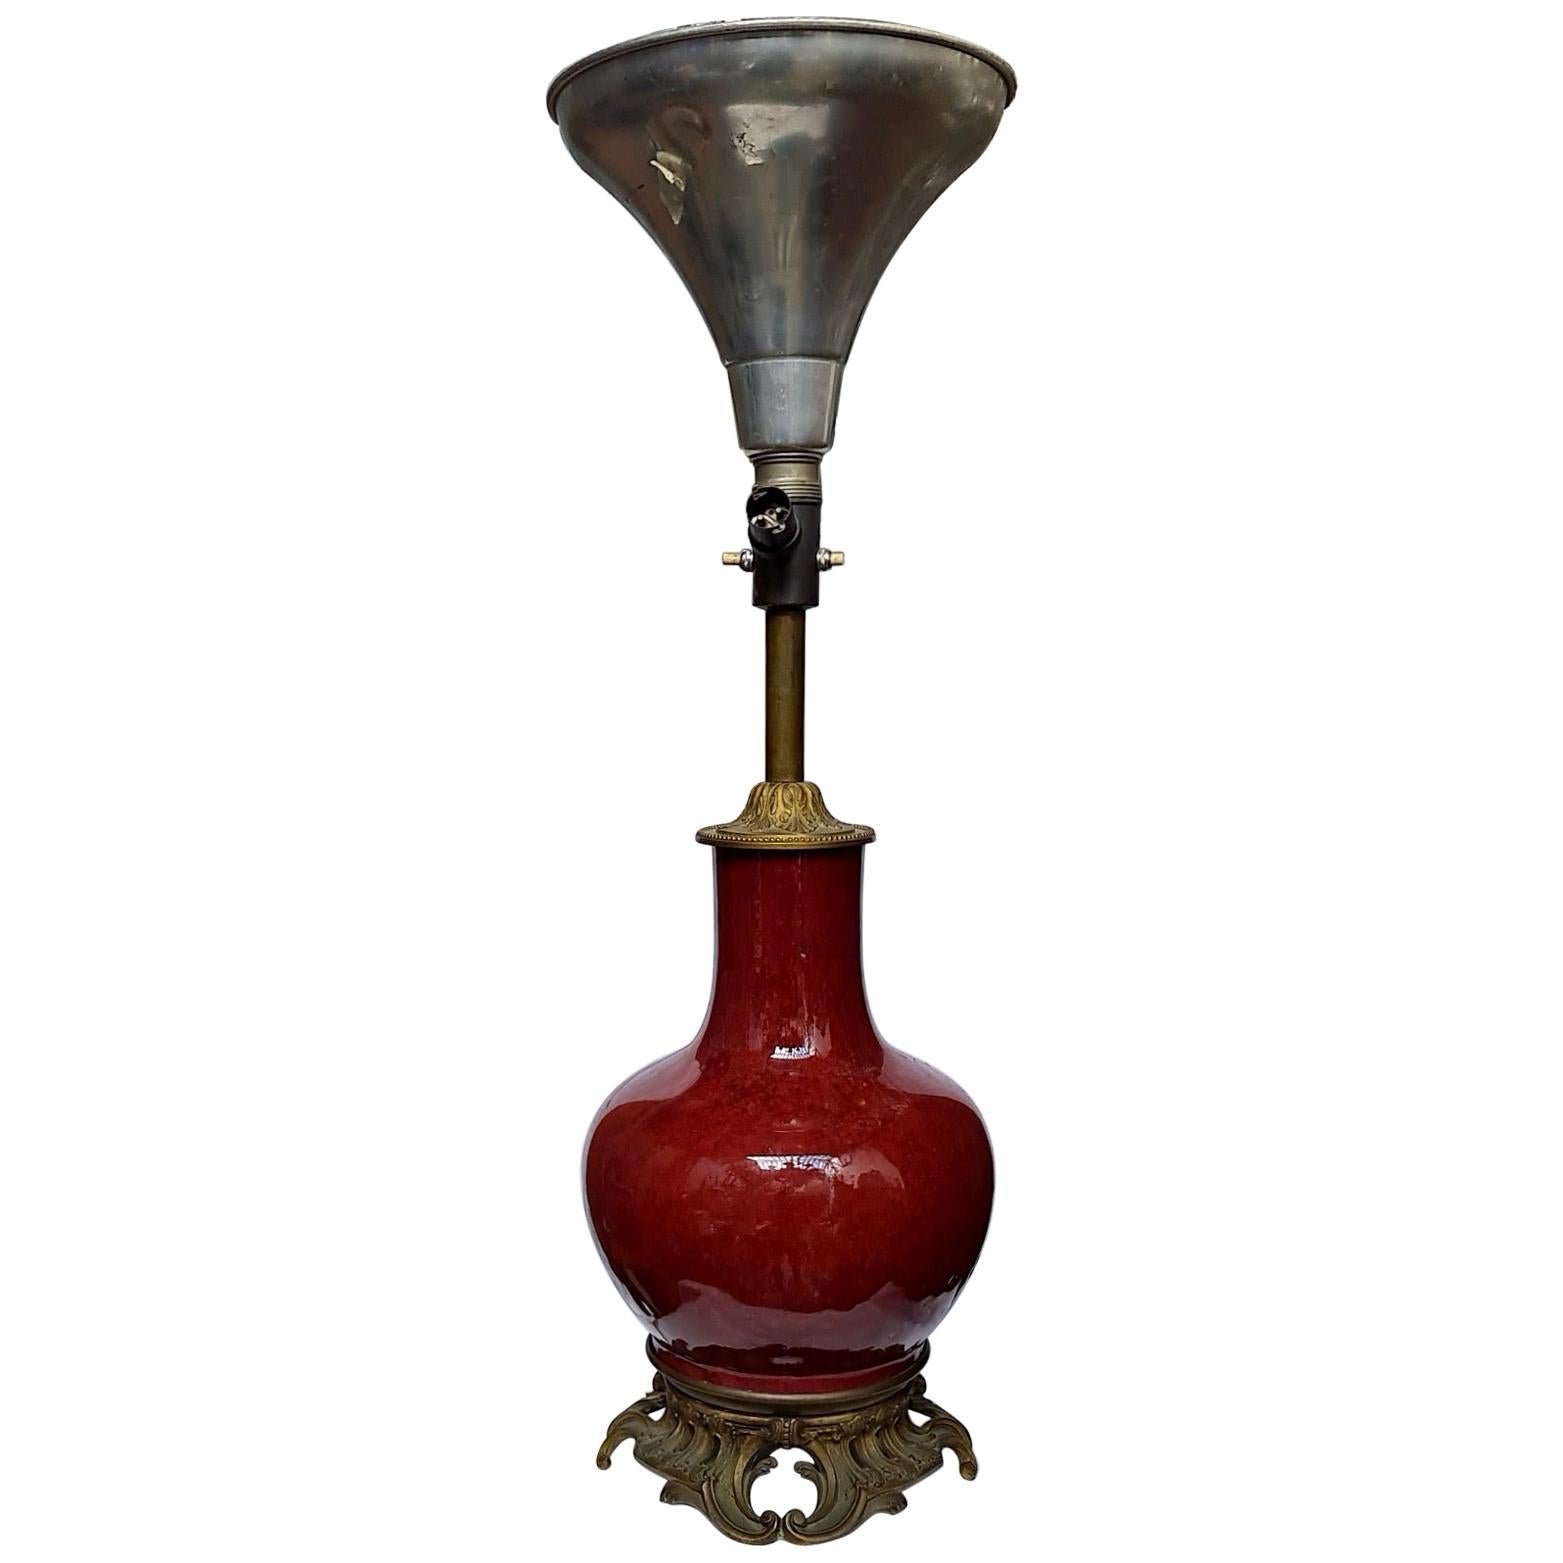 19th Century Chinese Porcelain Vase Ormolu-Mounted in Lamp